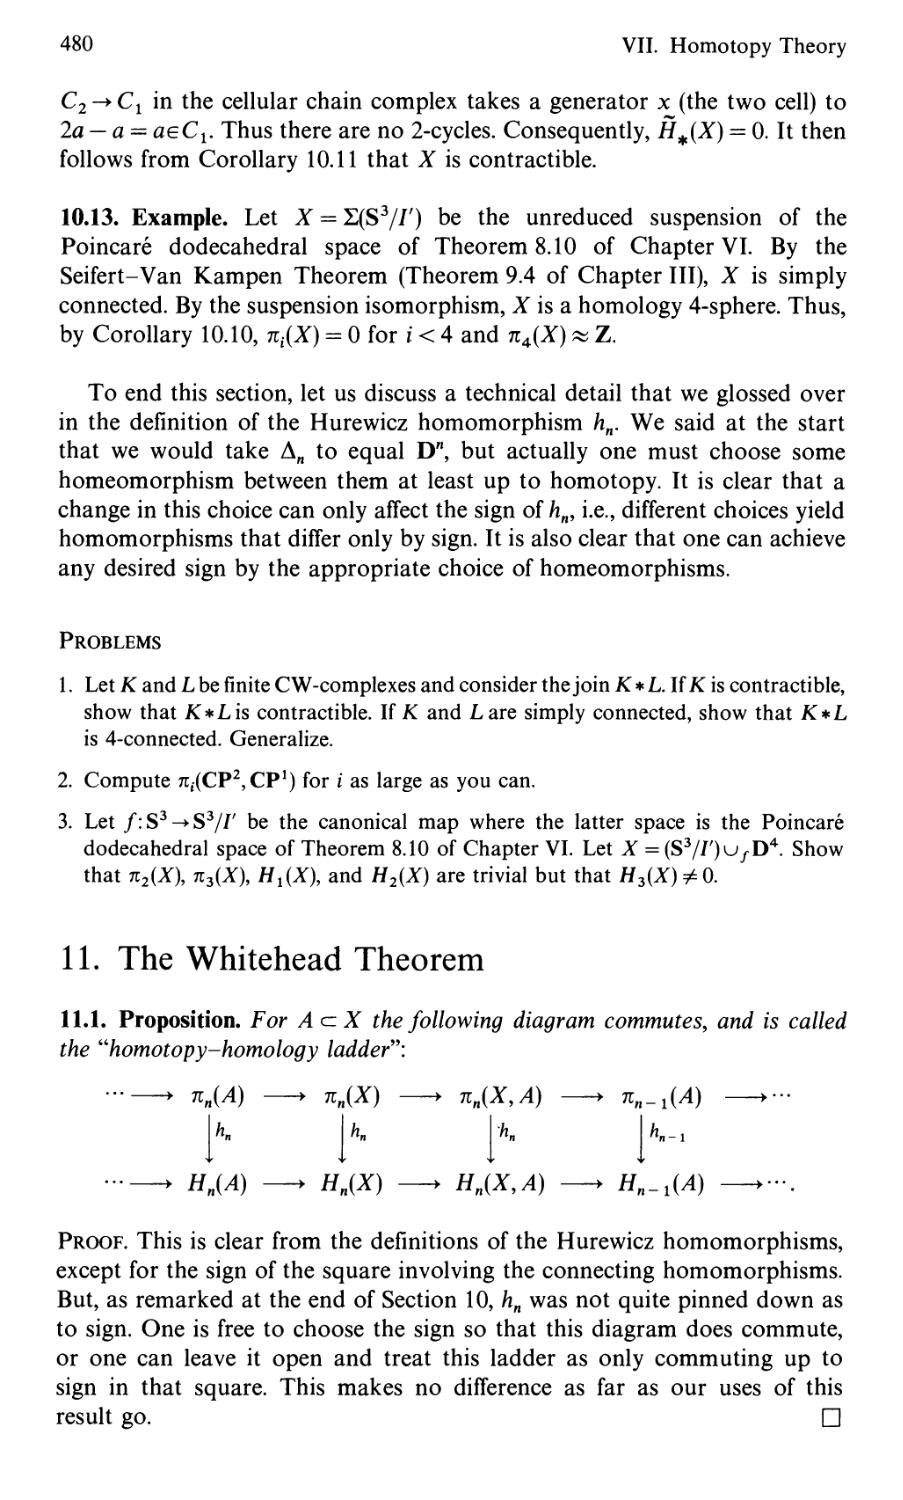 11. The Whitehead Theorem